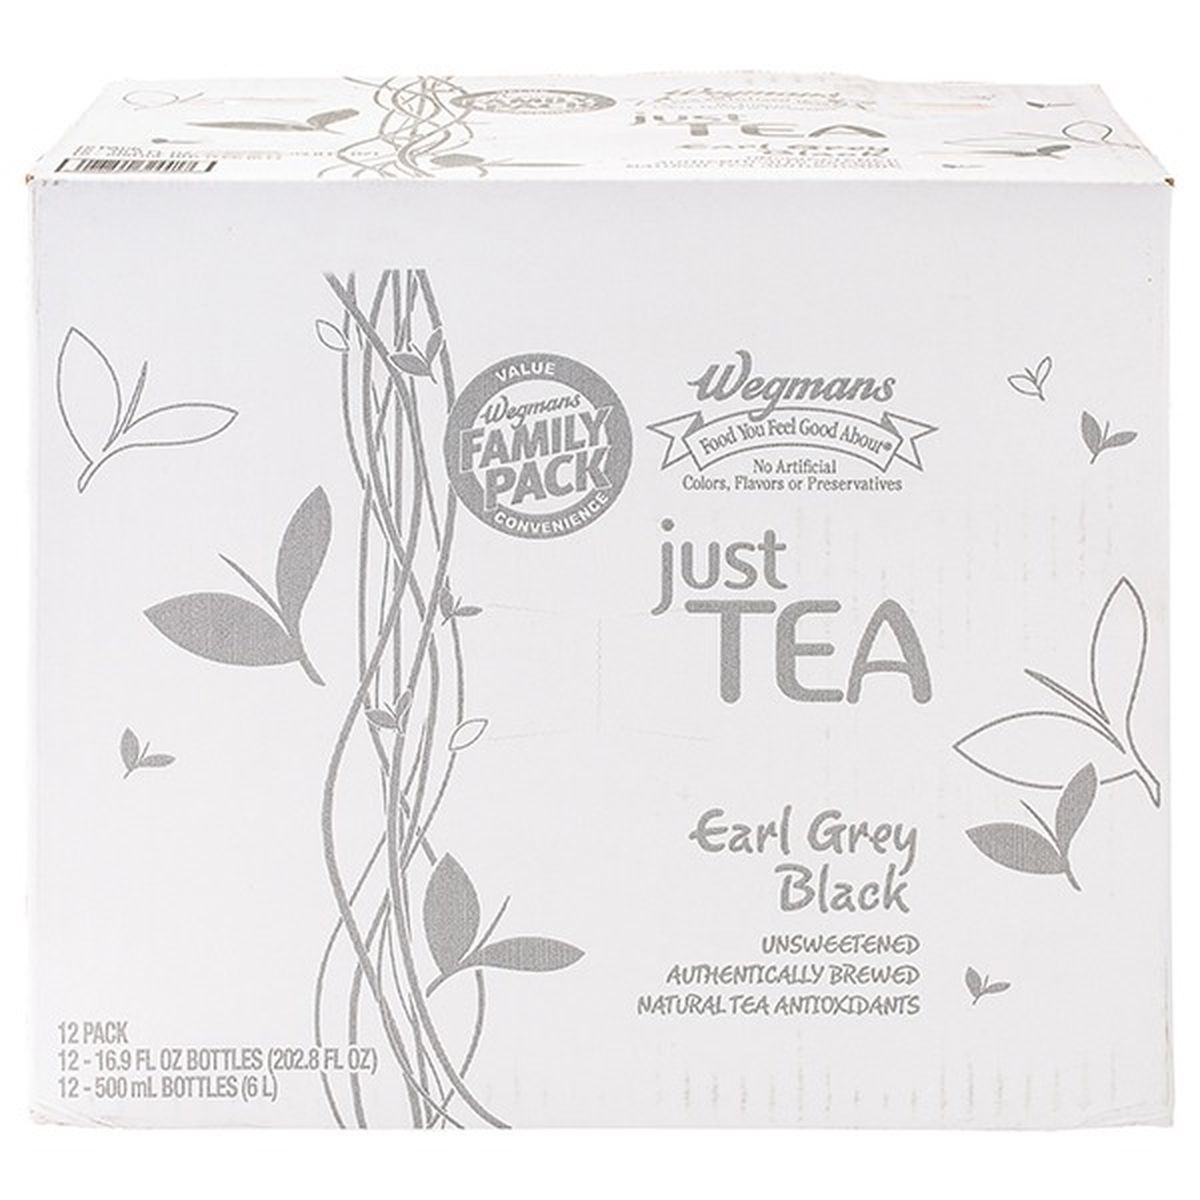 Calories in Wegmans Just Tea Tea, Earl Grey Black, 12 Pack, FAMILY PACK